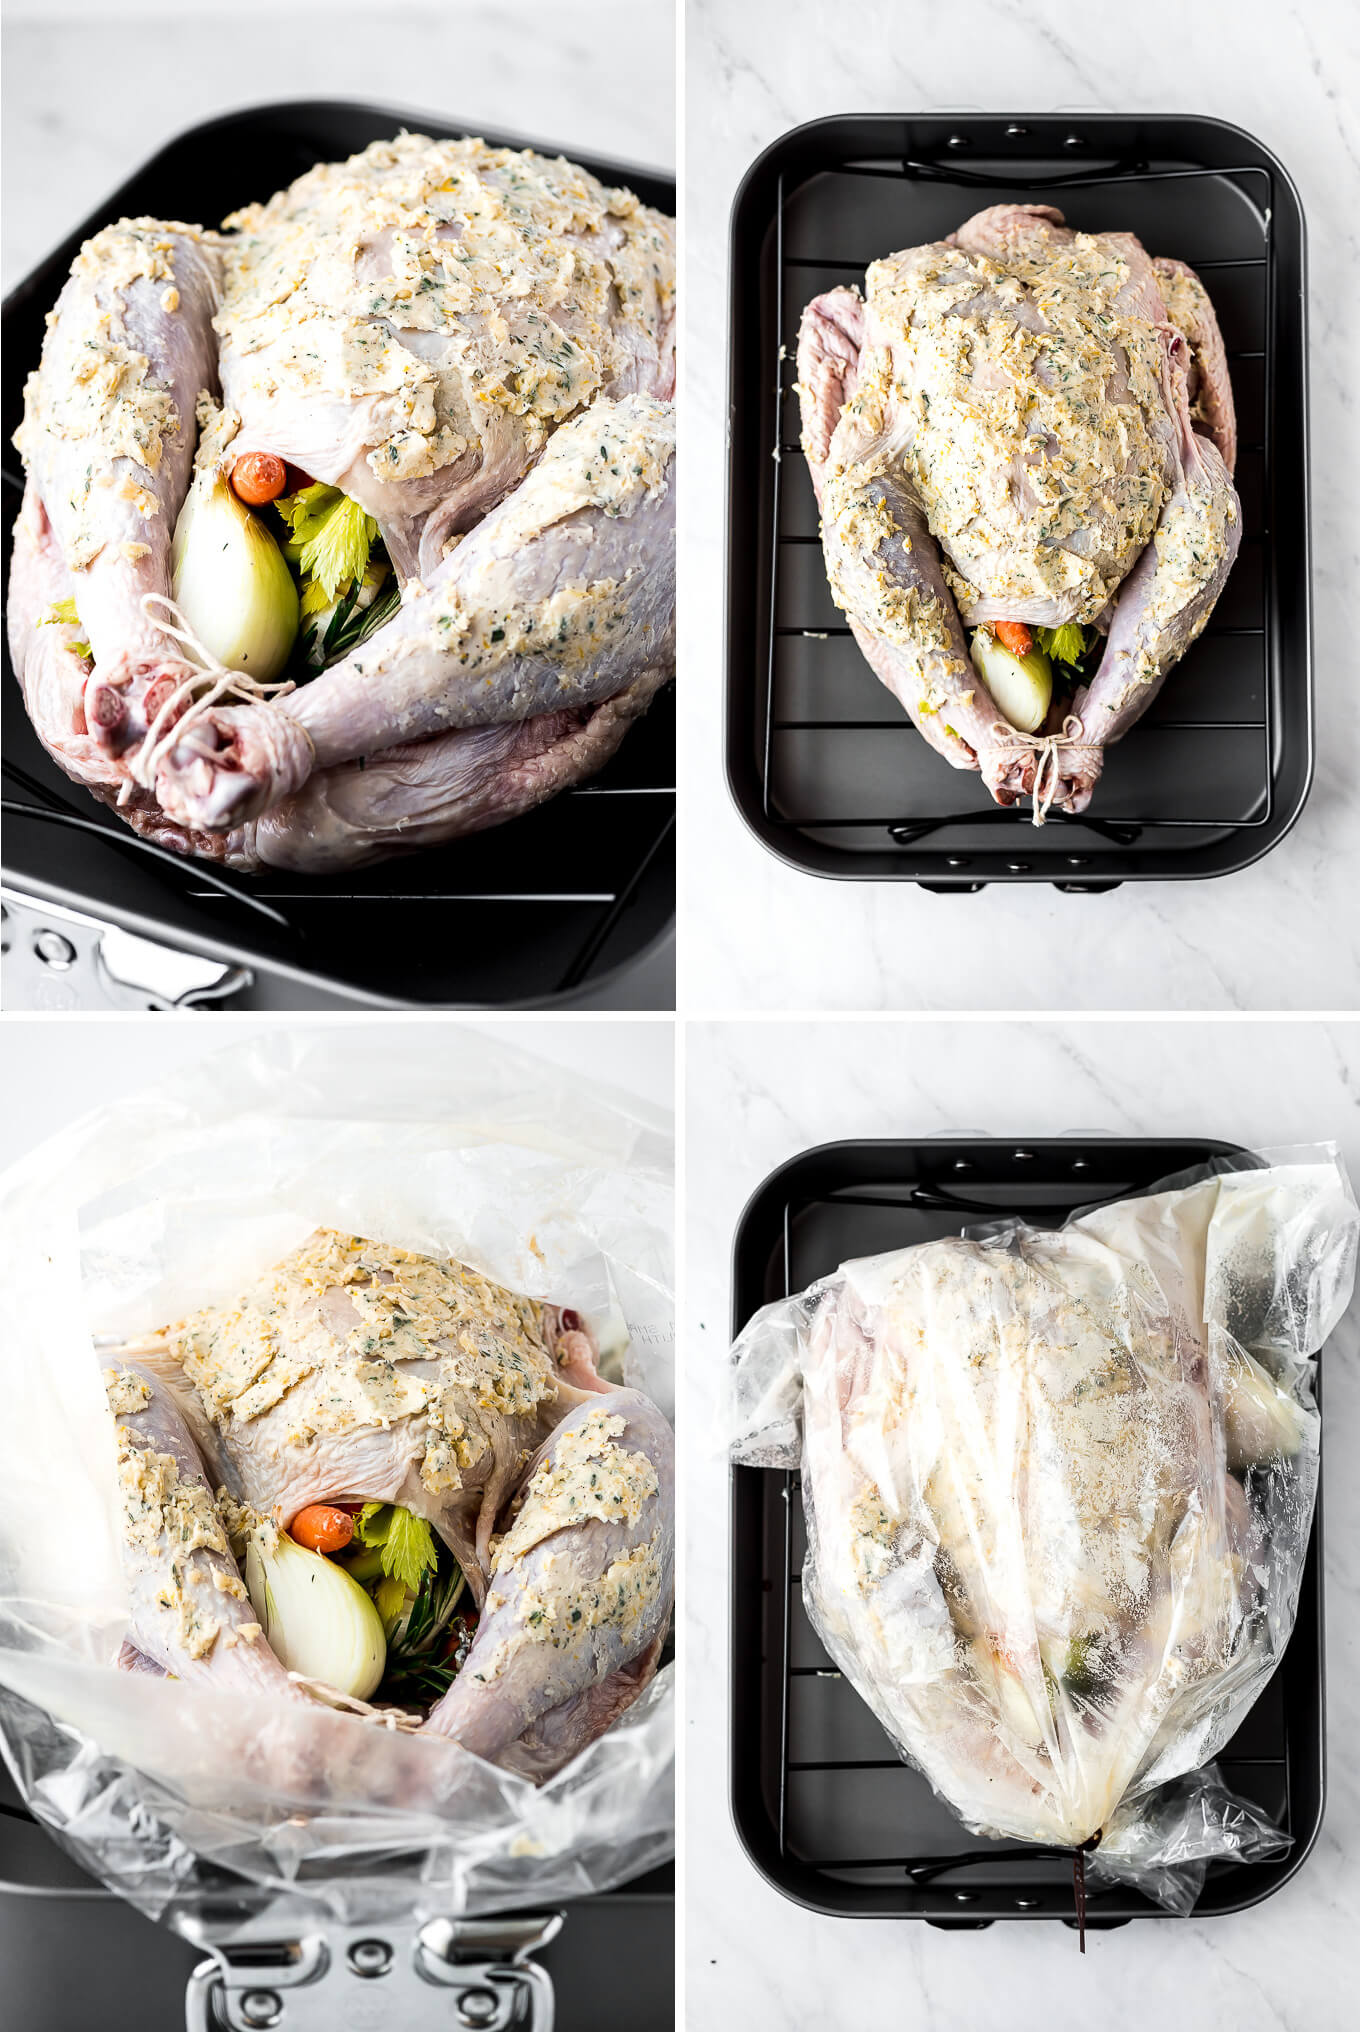 https://www.garnishandglaze.com/wp-content/uploads/2019/11/turkey-in-a-bag-recipe-1.jpg